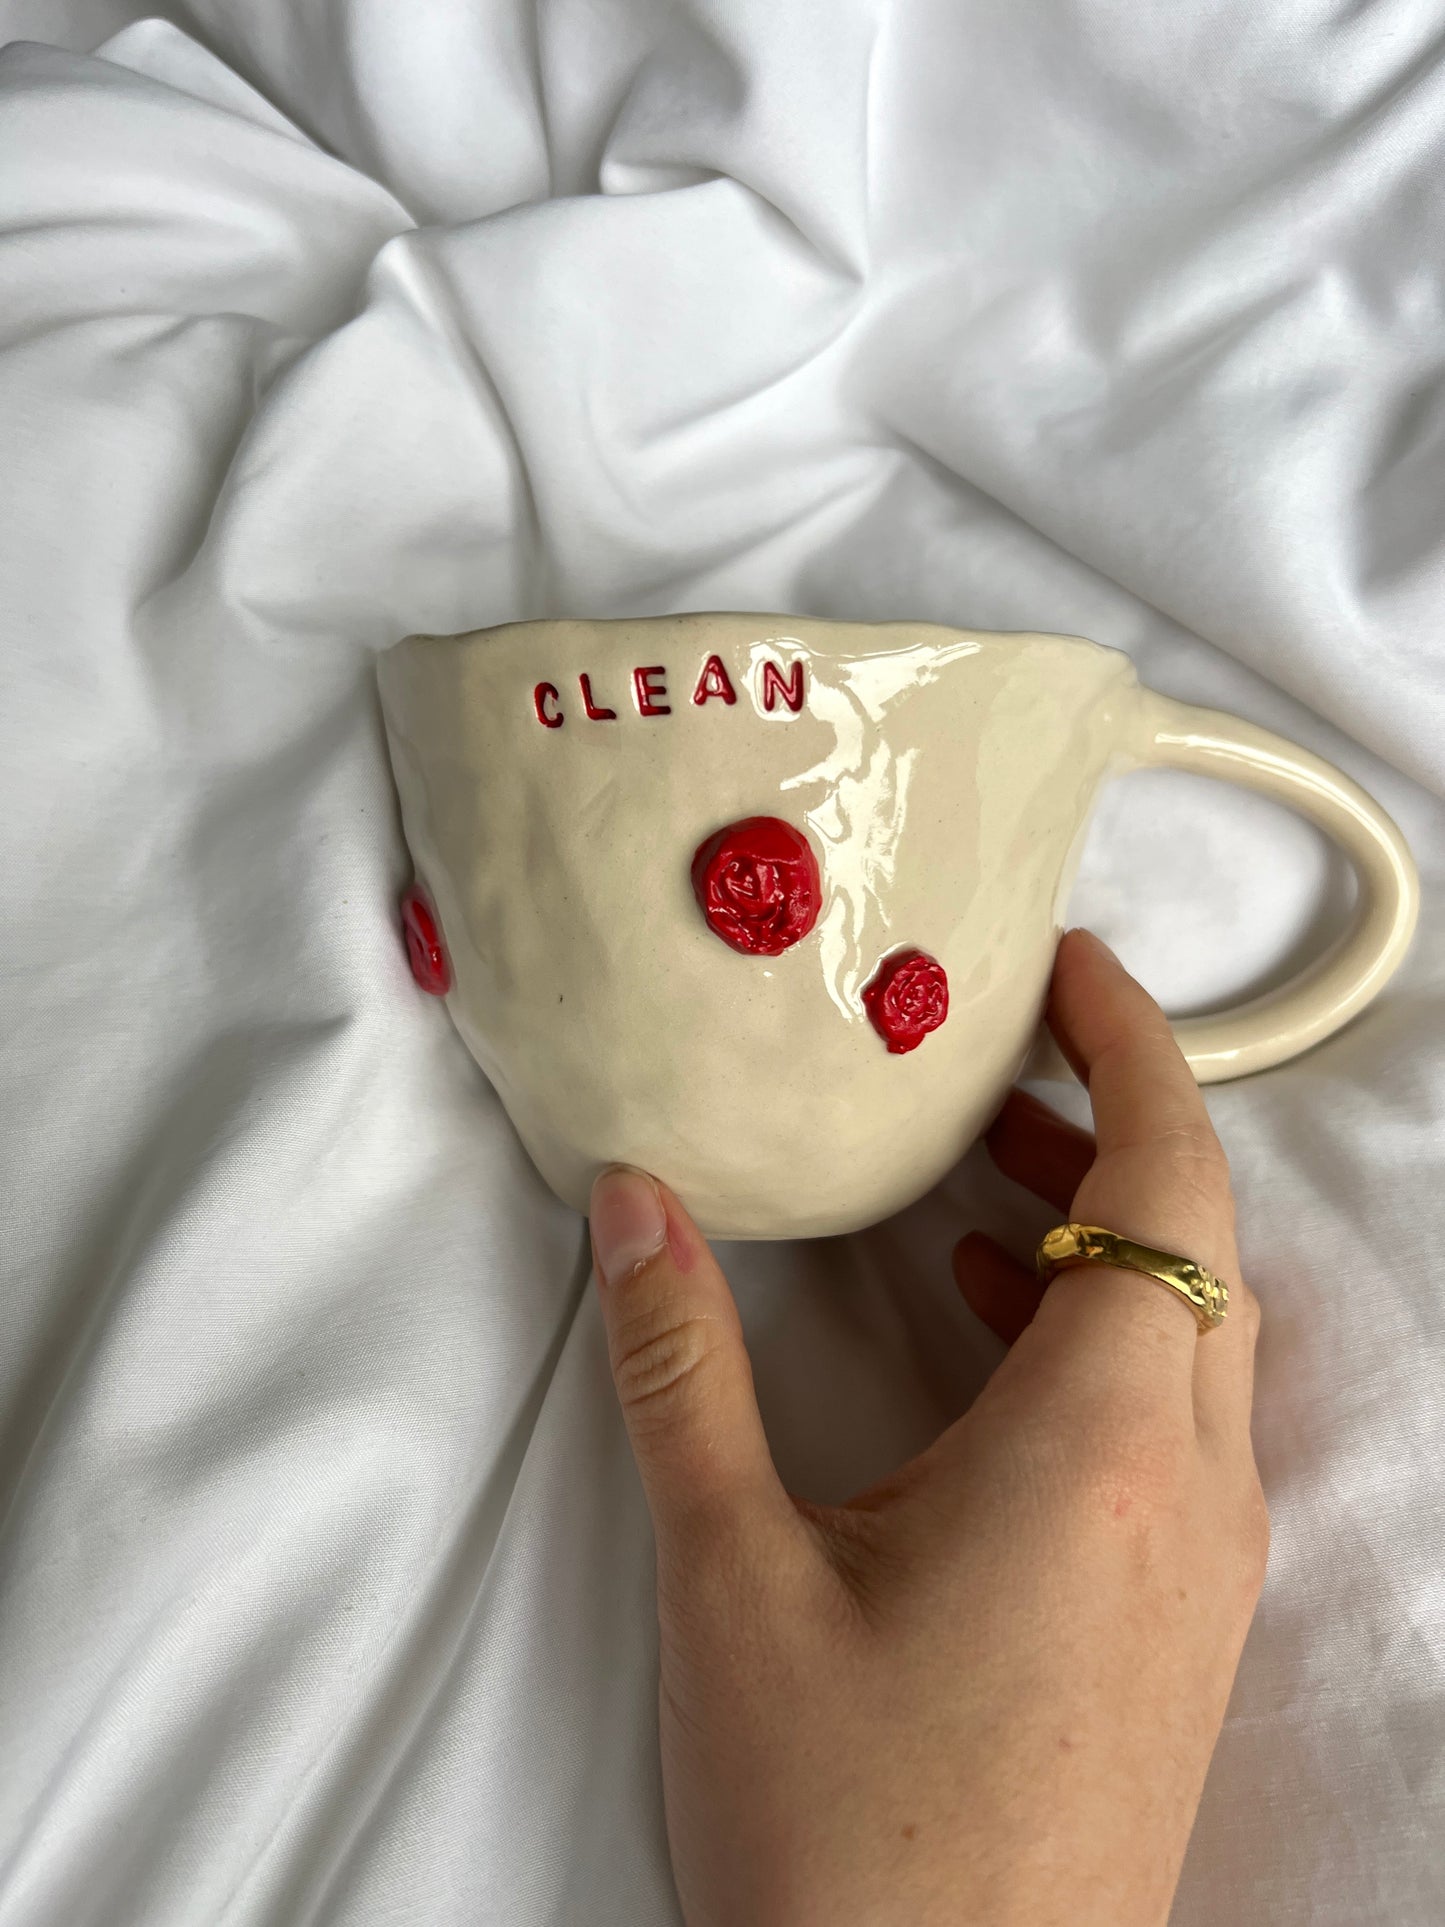 The clean mug